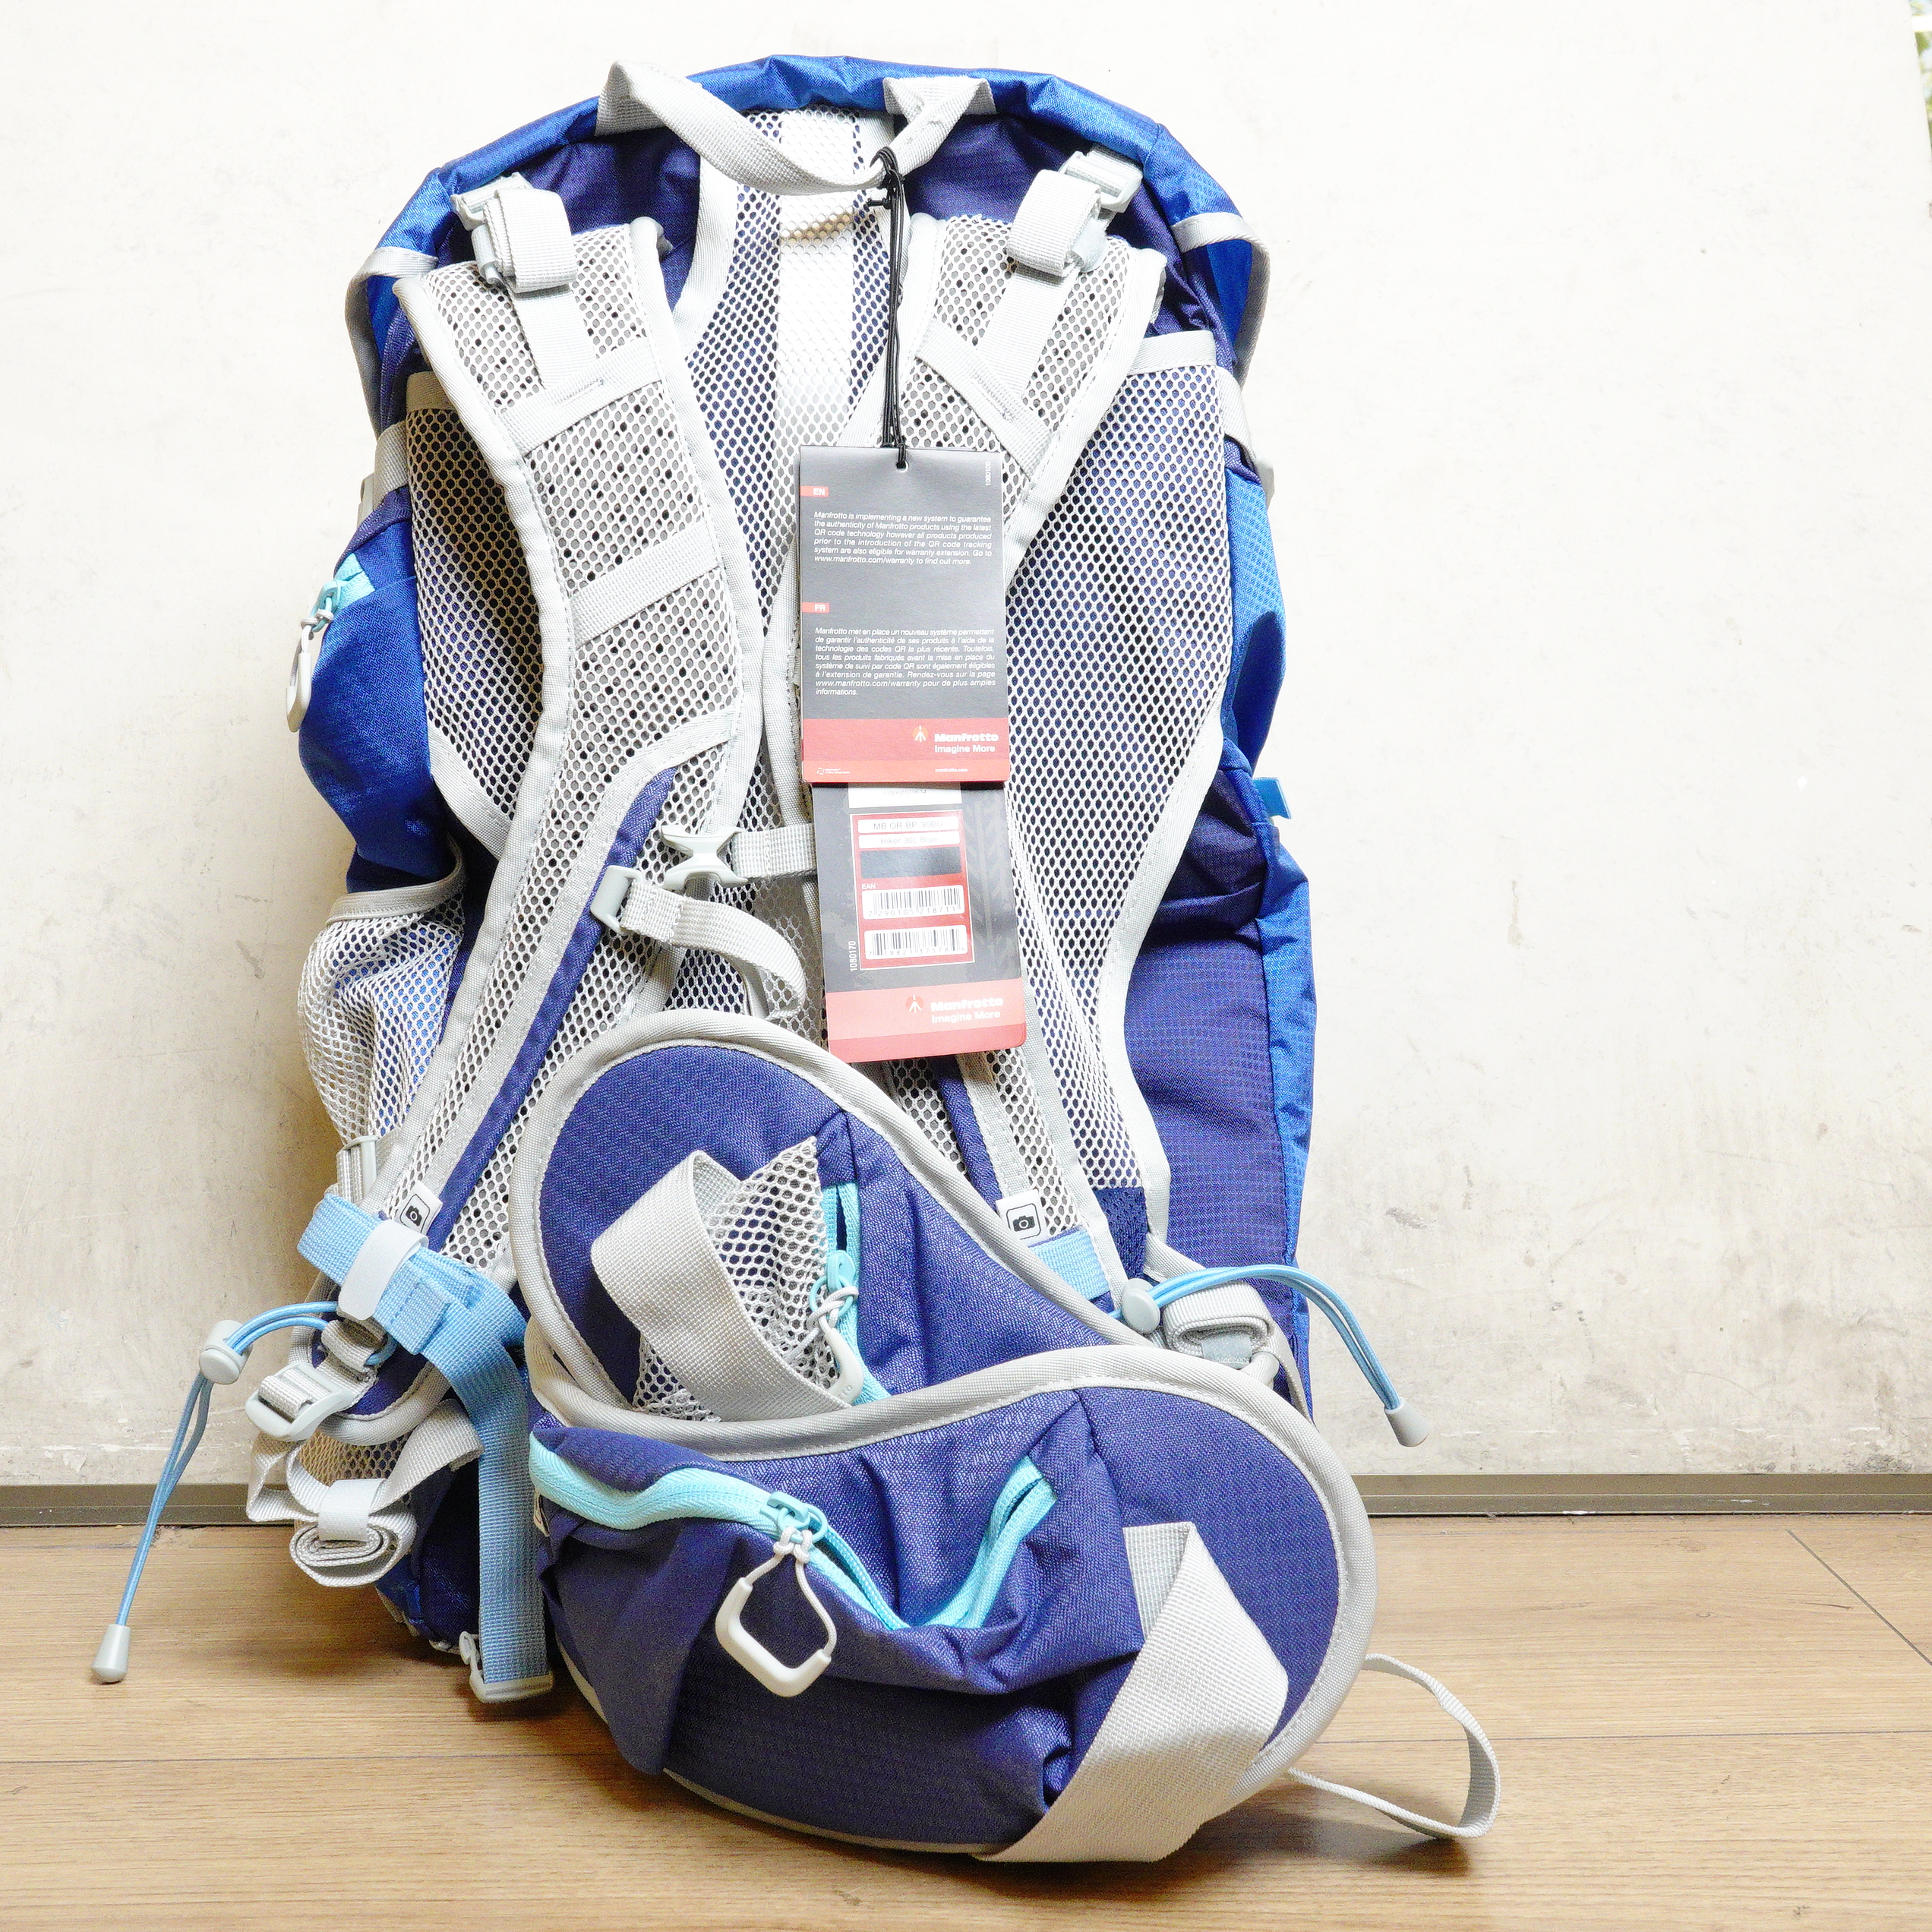 Manfrotto Offroad Hiker backpack 30L Azul para DSLR - Usado